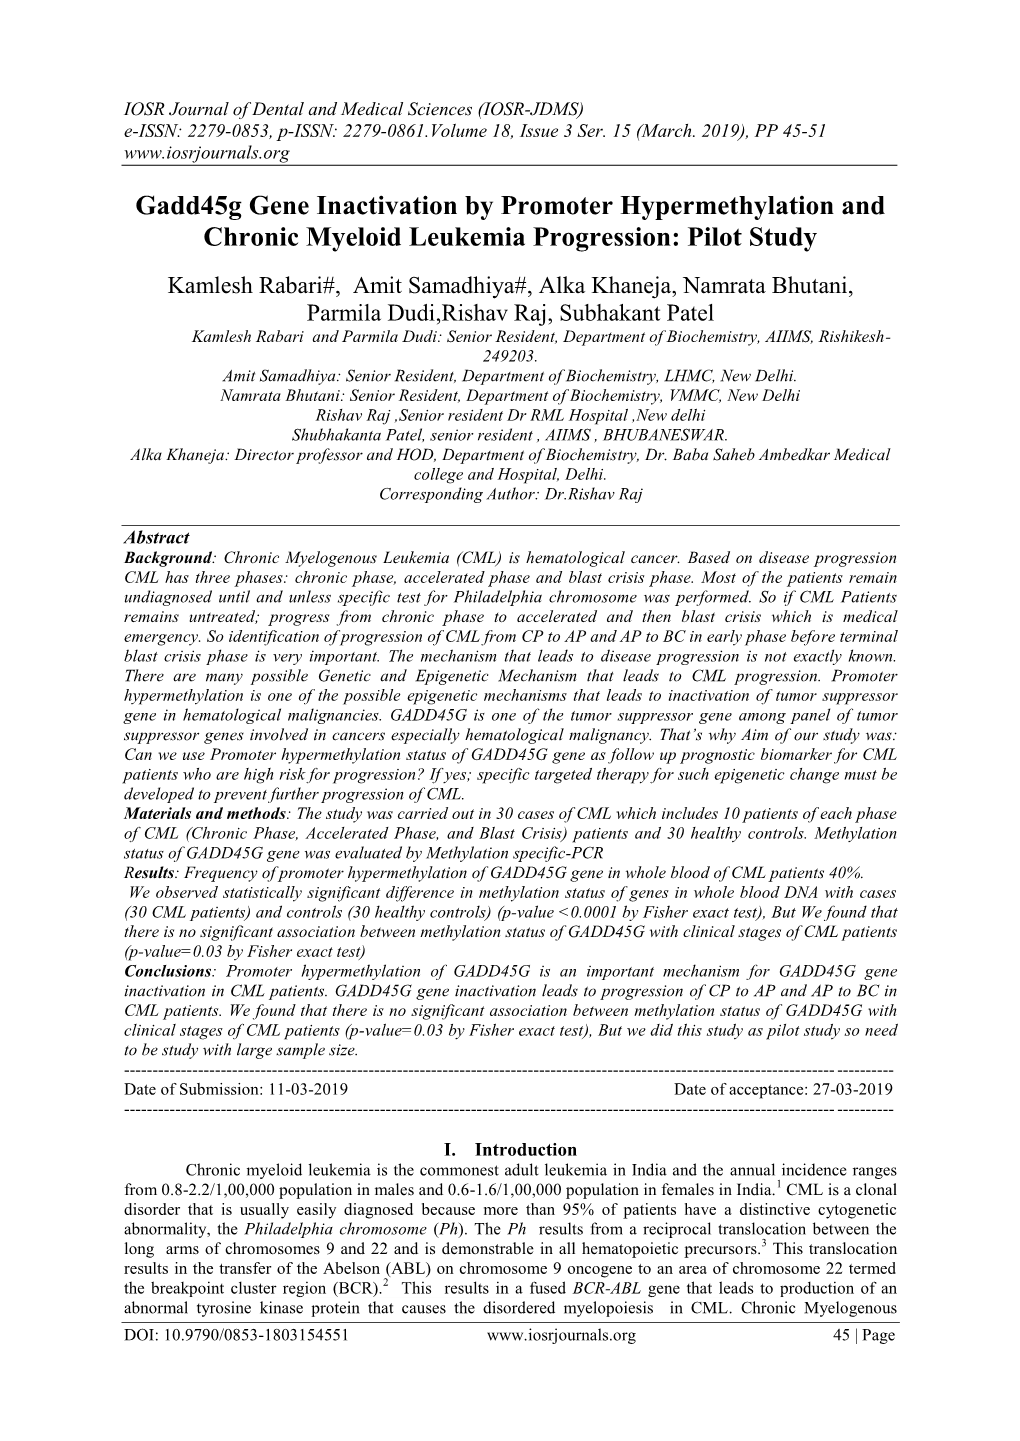 Gadd45g Gene Inactivation by Promoter Hypermethylation and Chronic Myeloid Leukemia Progression: Pilot Study